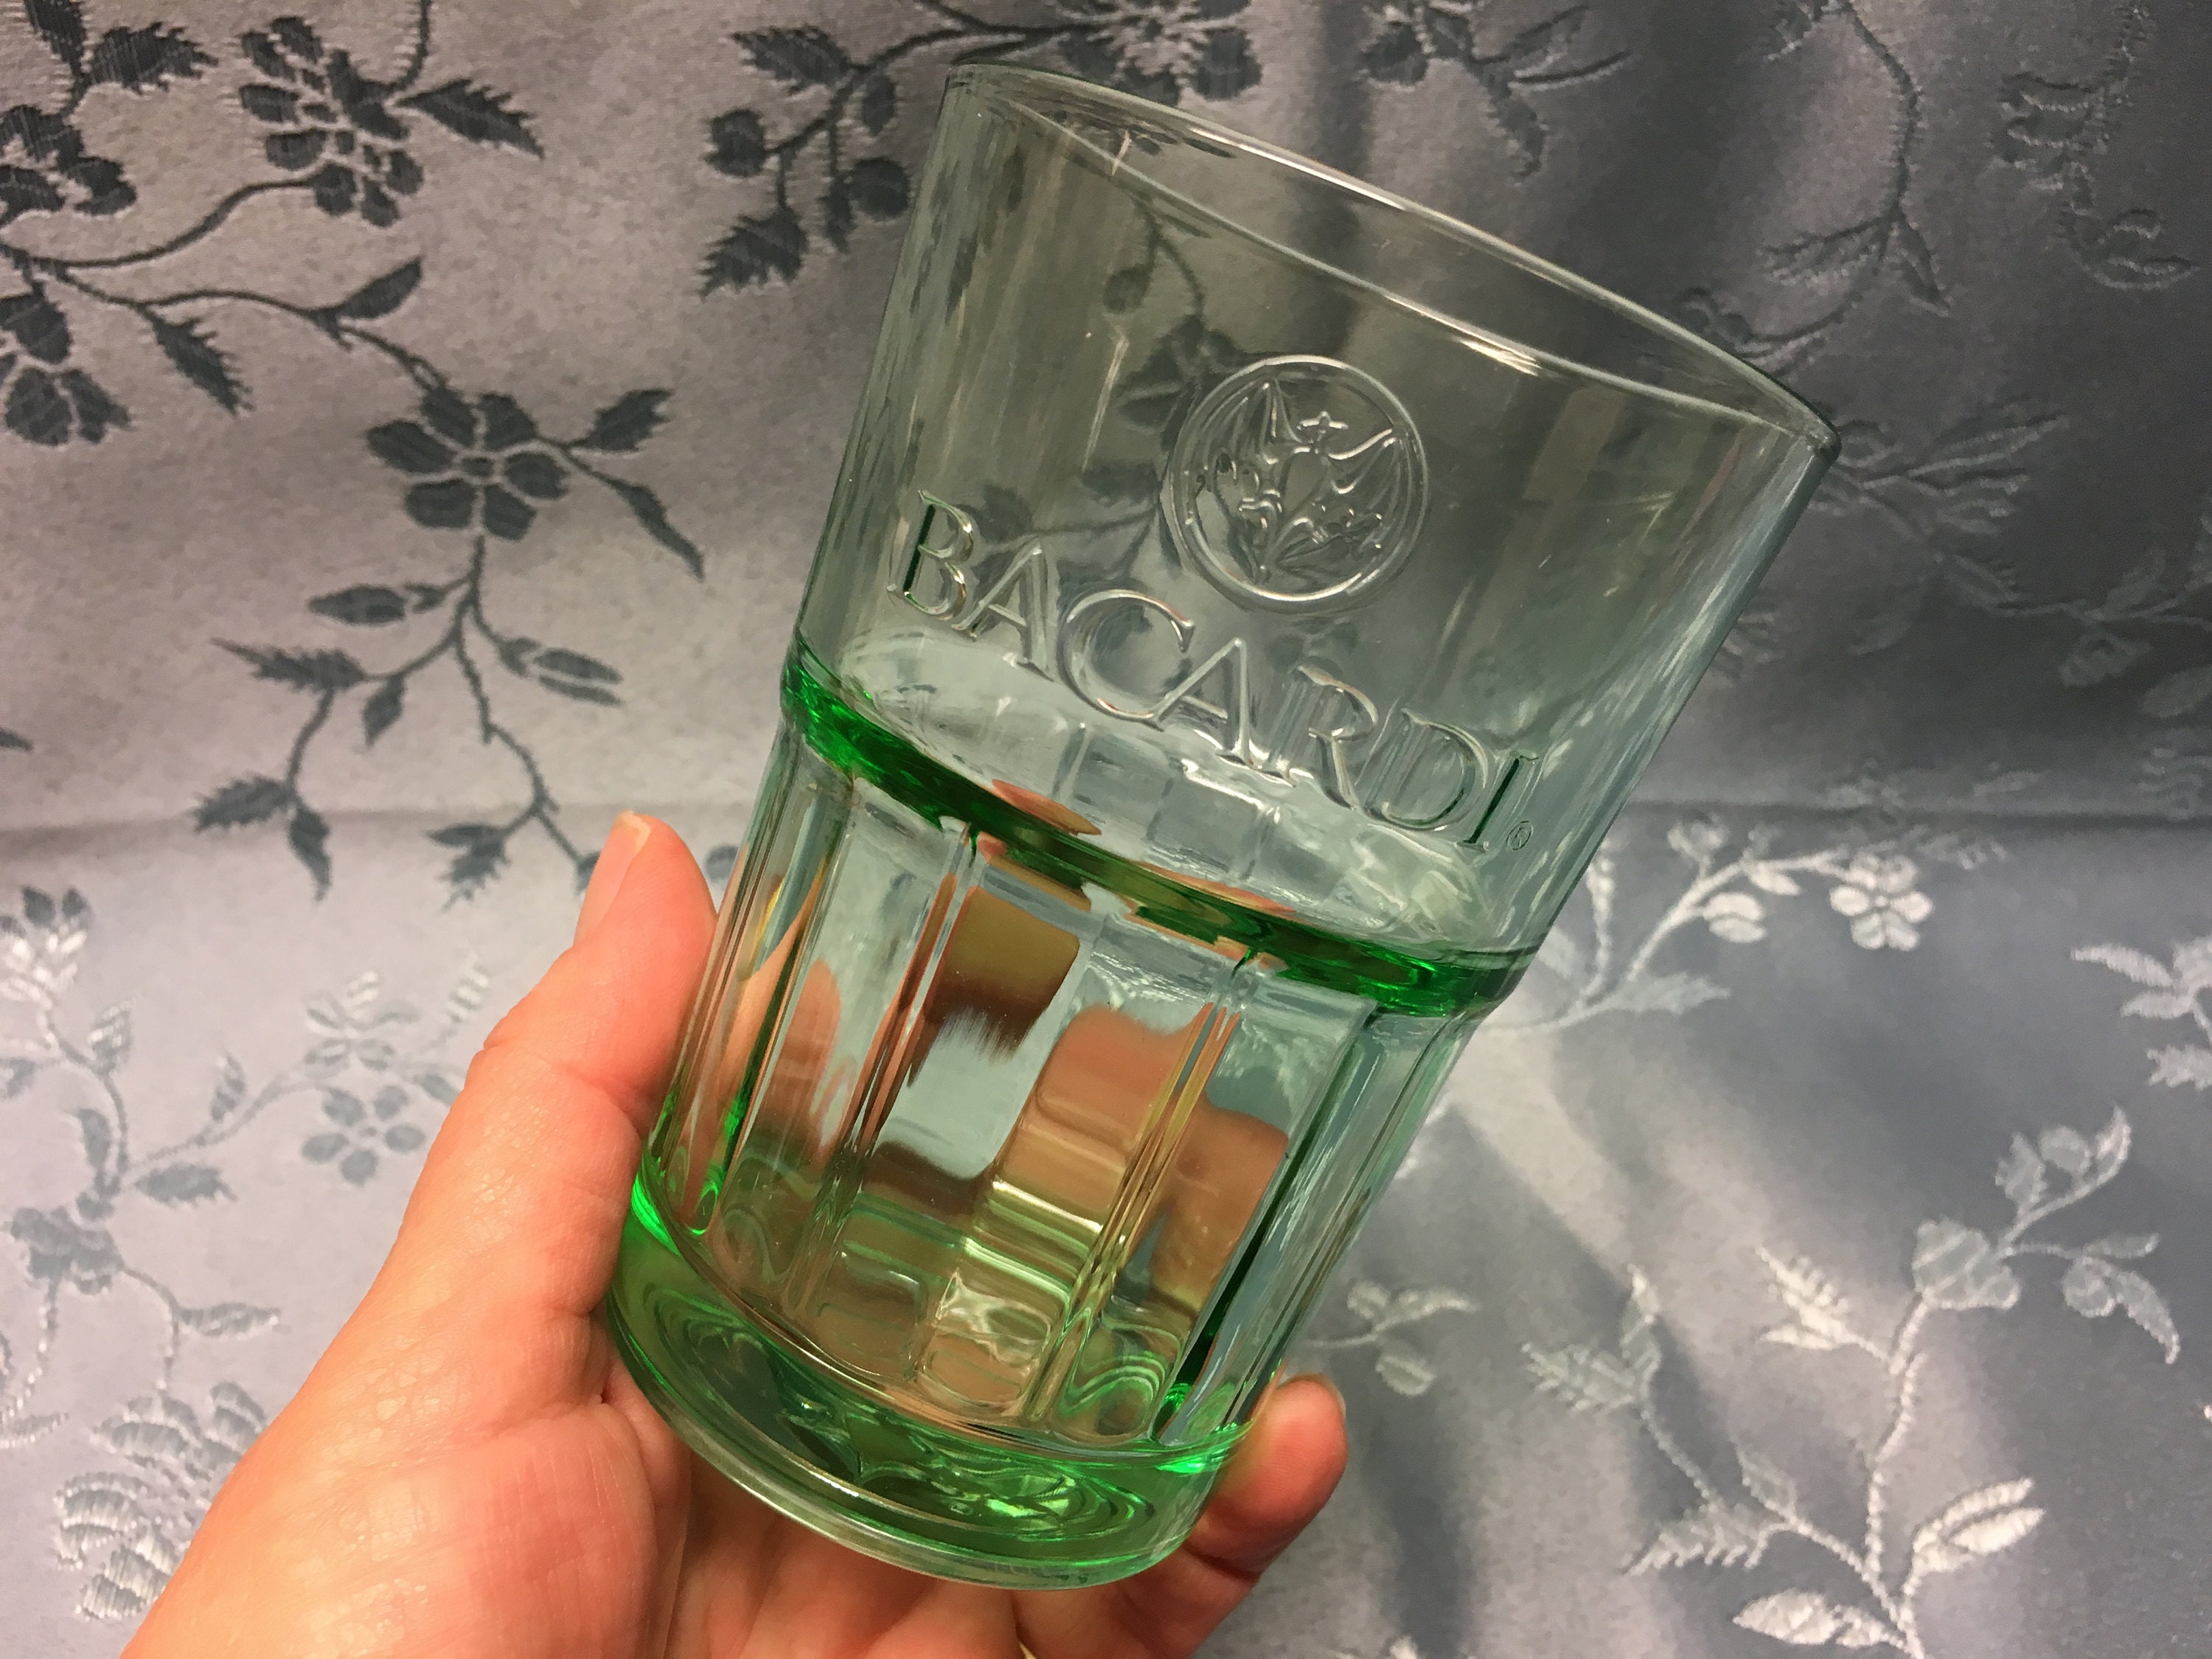 Vintage Set of 4 Drinking Glasses Cinzano Cities Scotch Glass Mug